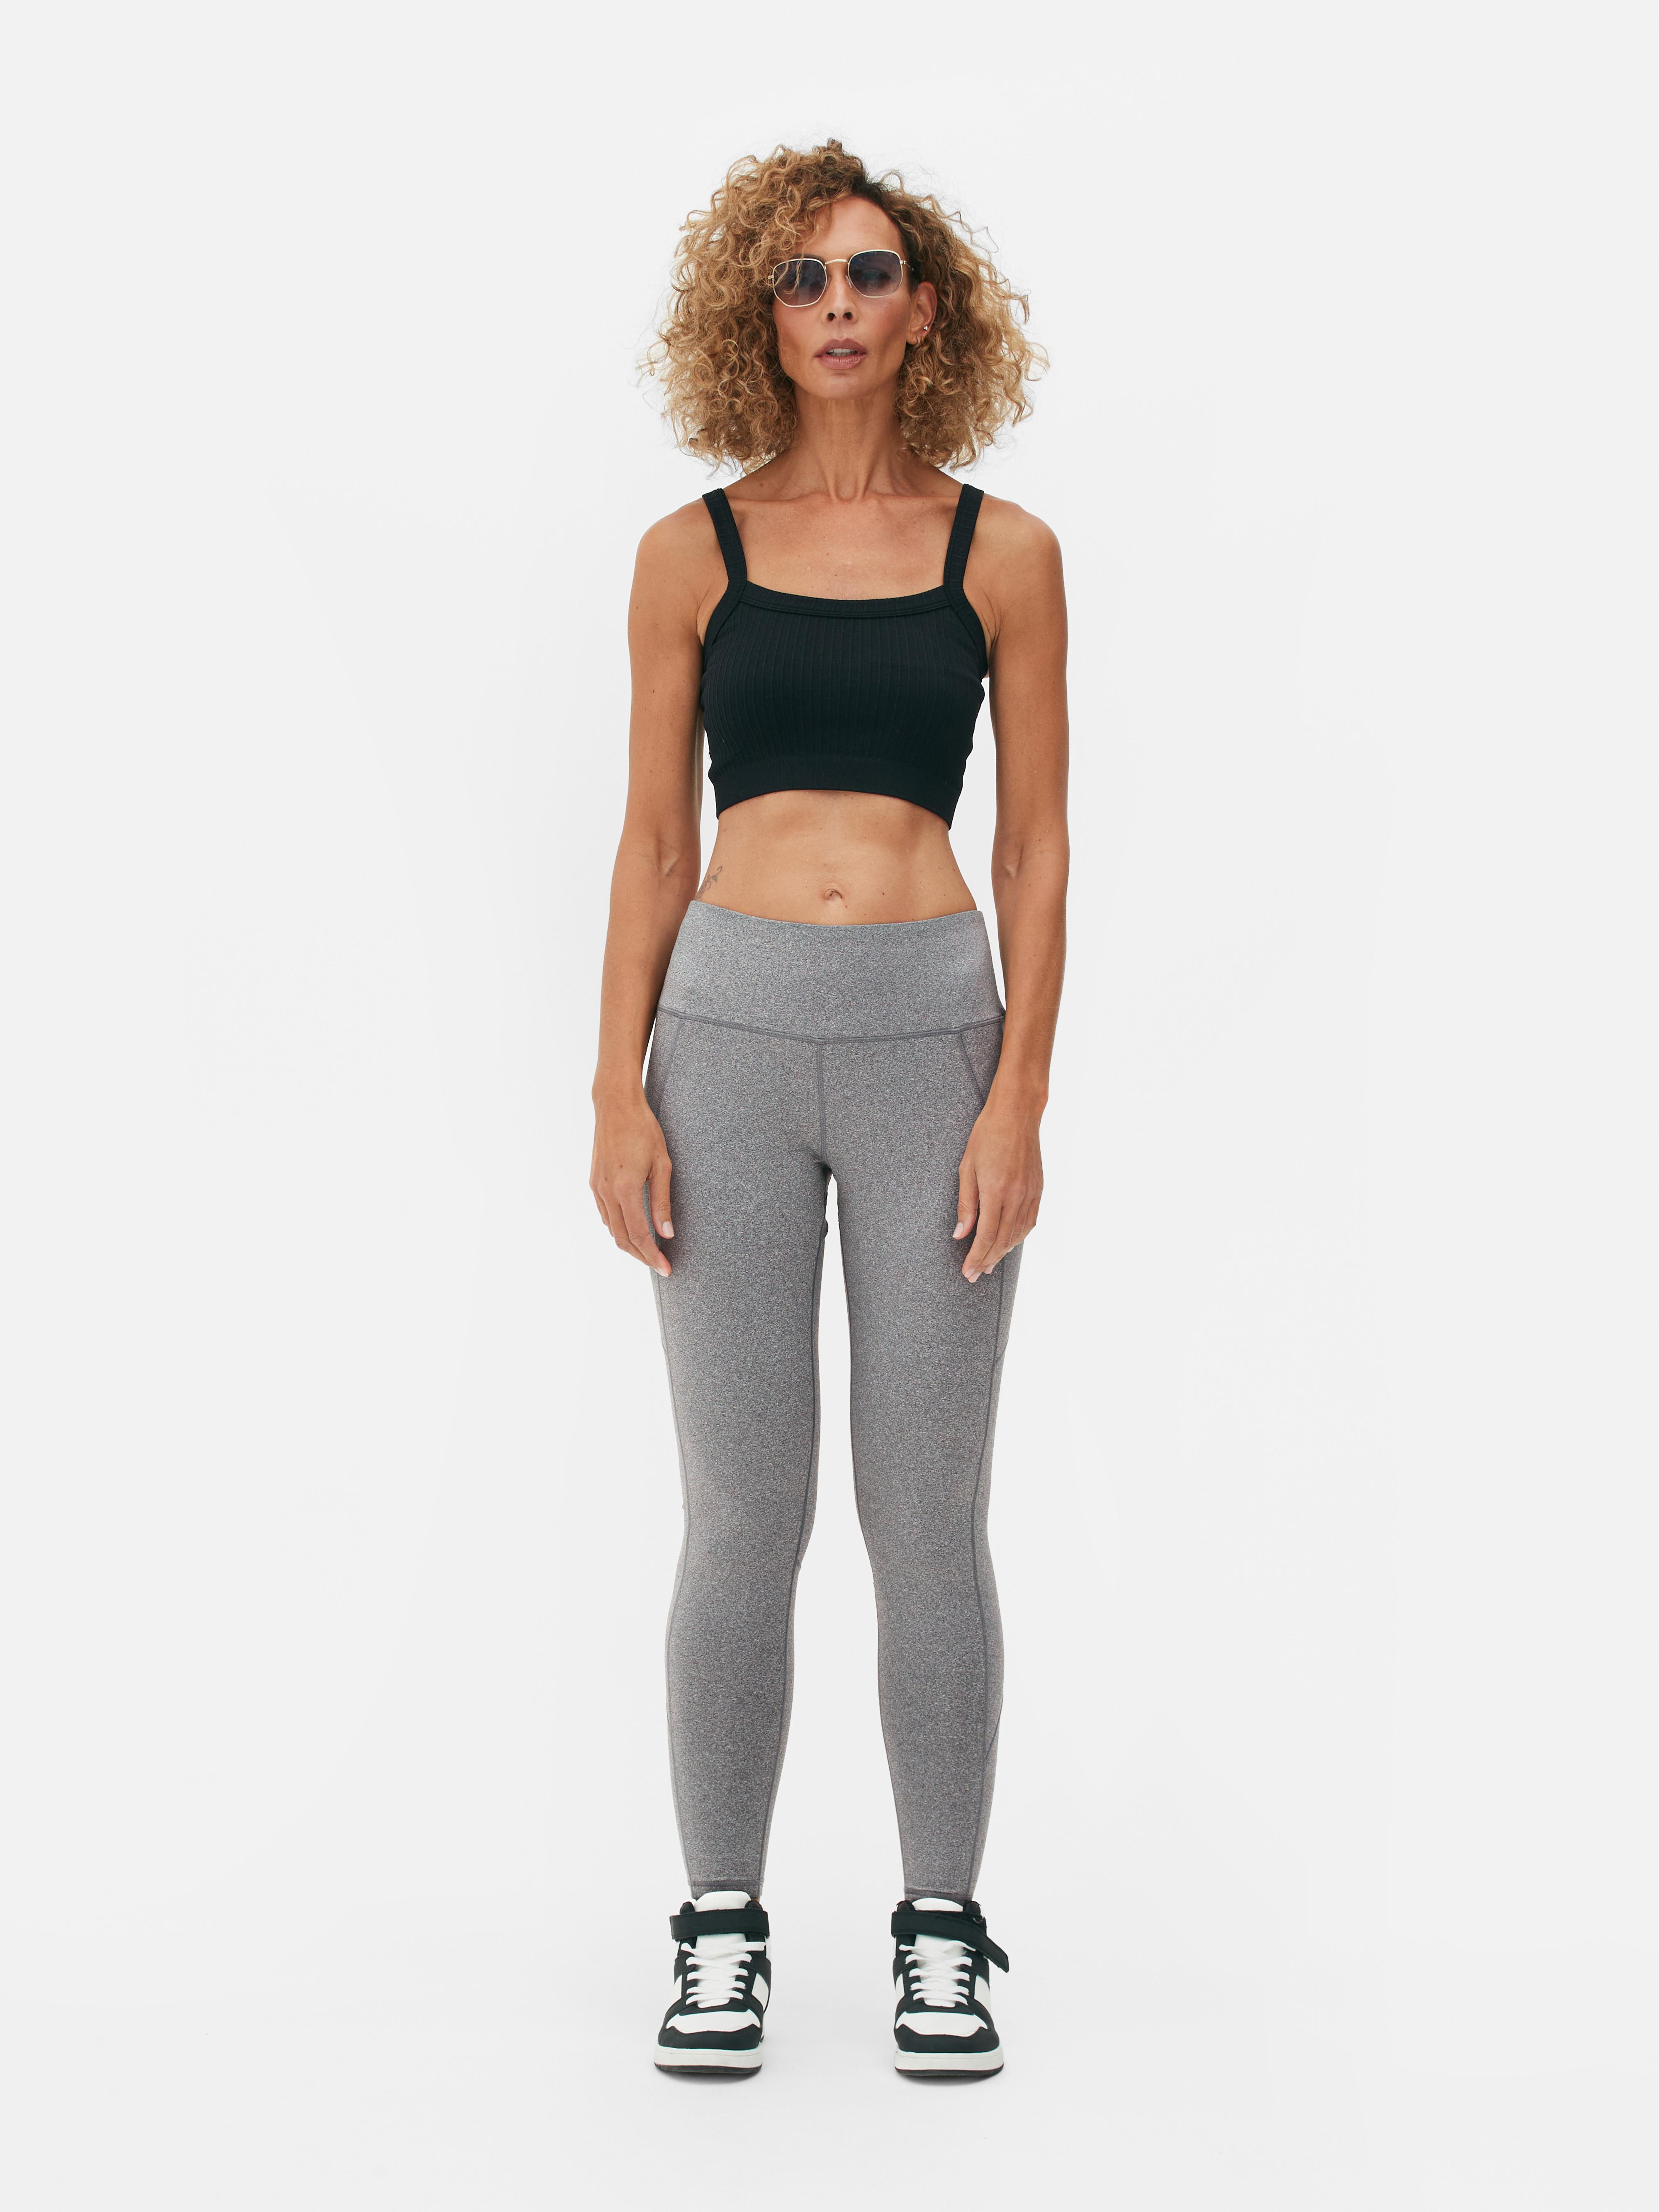 Primark workout leggings grey M 12/14 full length